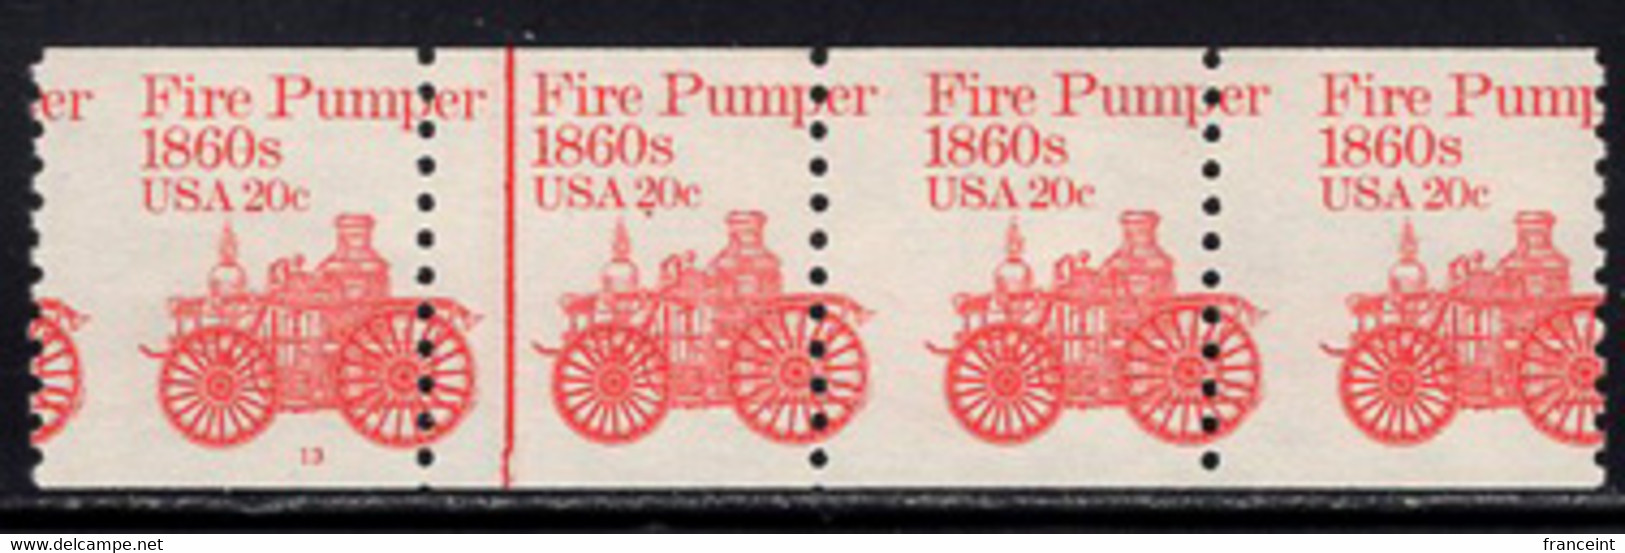 U.S.A.(1981) 1860 Fire Pumper. Vertical Misperforation In Strip Of 4 Cutting Off Part Of The Wheel. Scott No 1908. - Errors, Freaks & Oddities (EFOs)